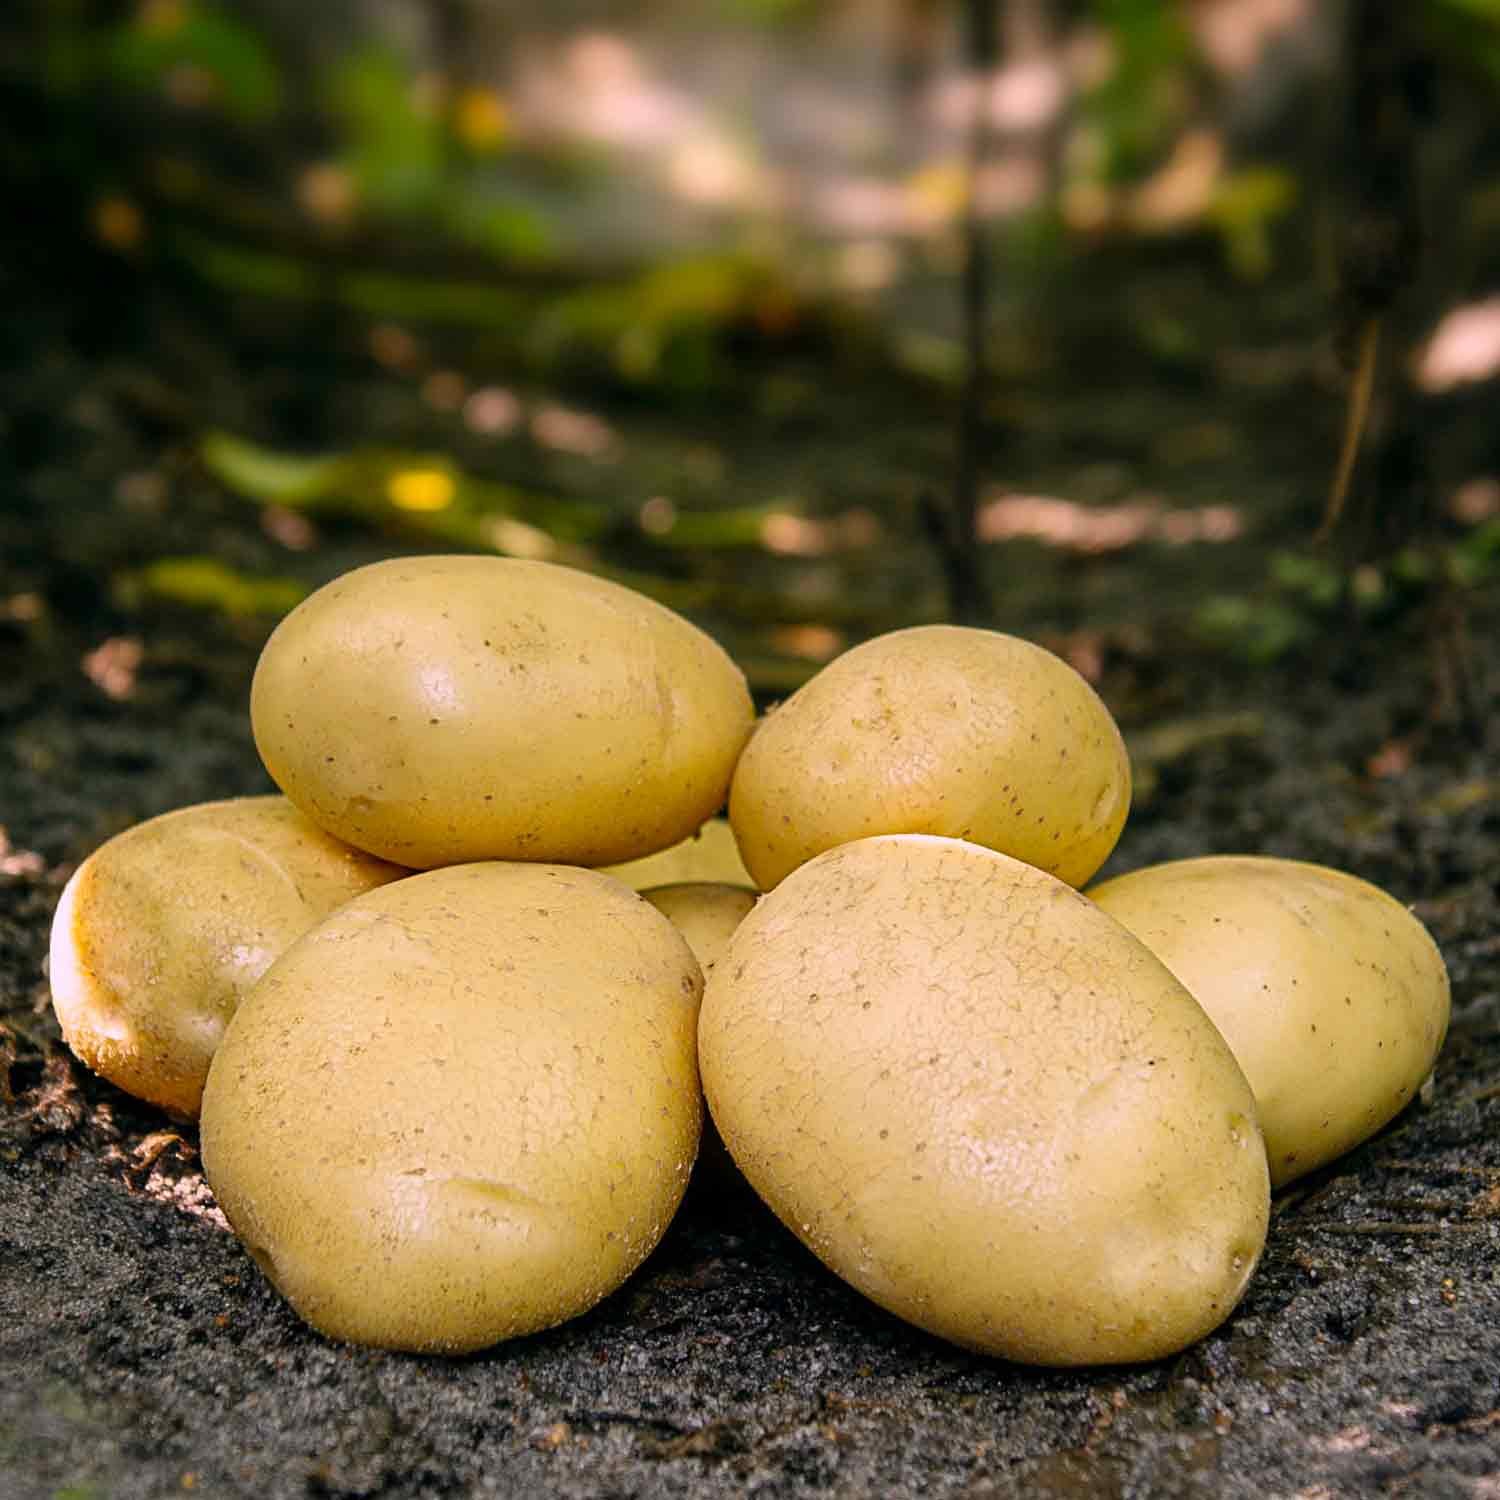 Folva læggekartofler på jorden